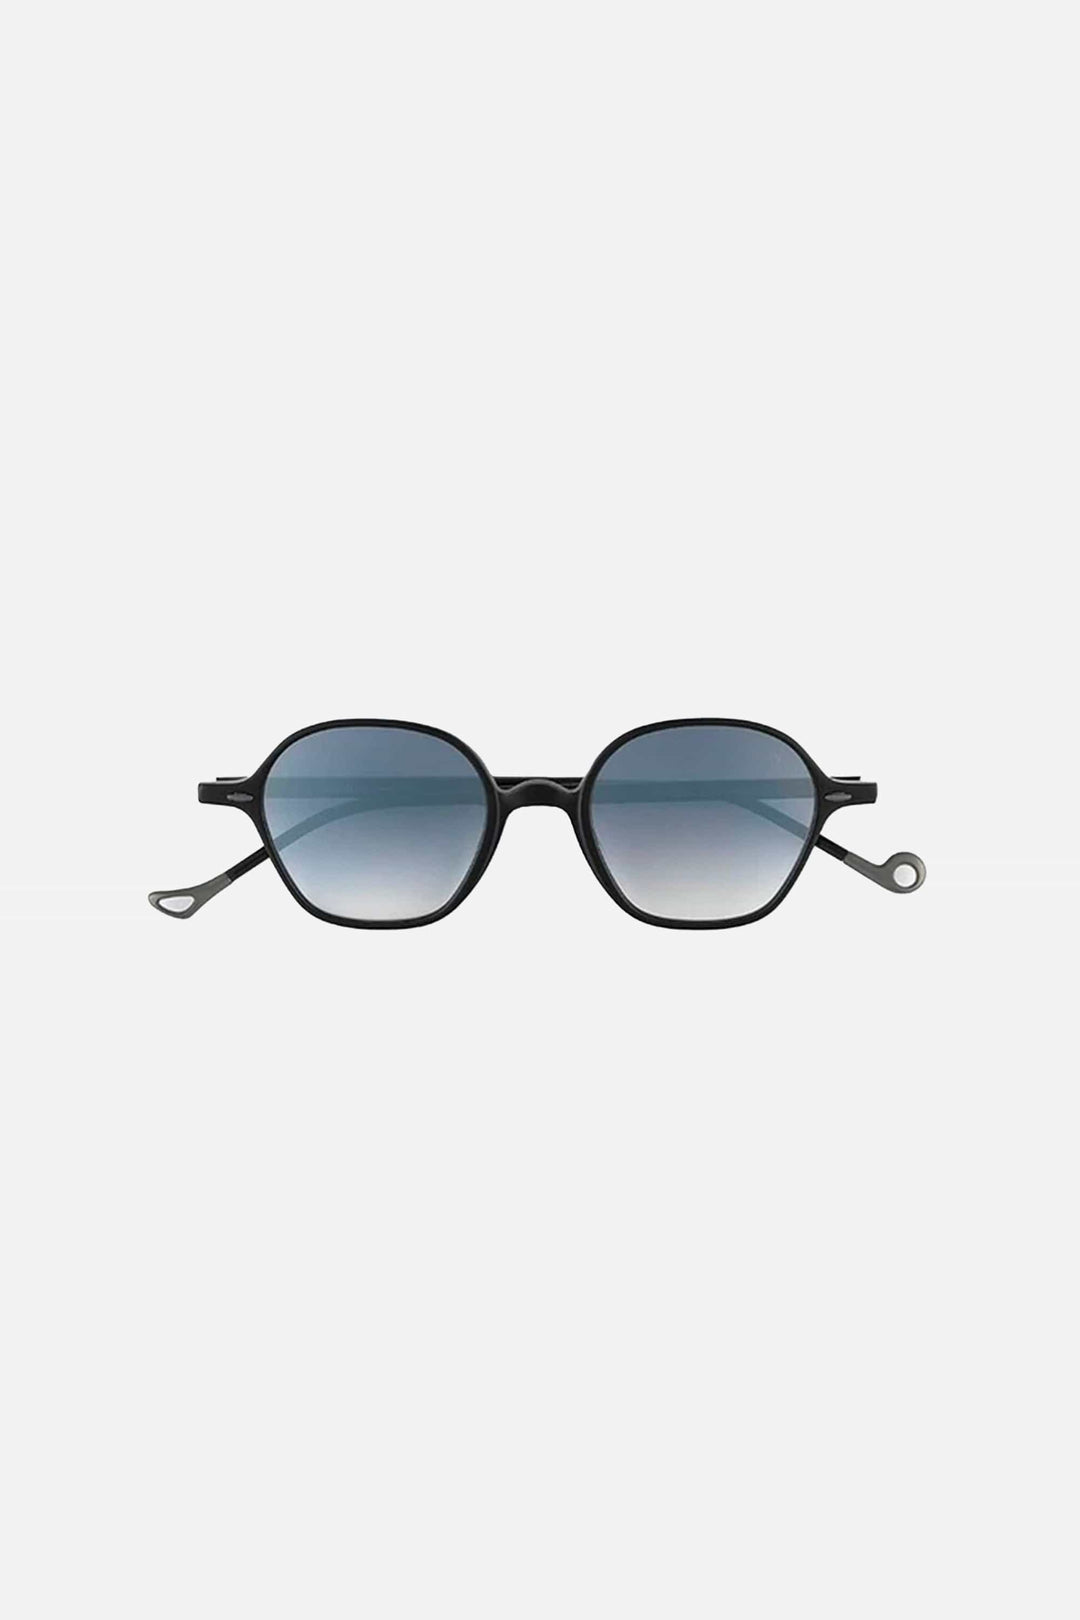 Eyepetizer acetate round Visconti black sunglasses - Eyewear Club